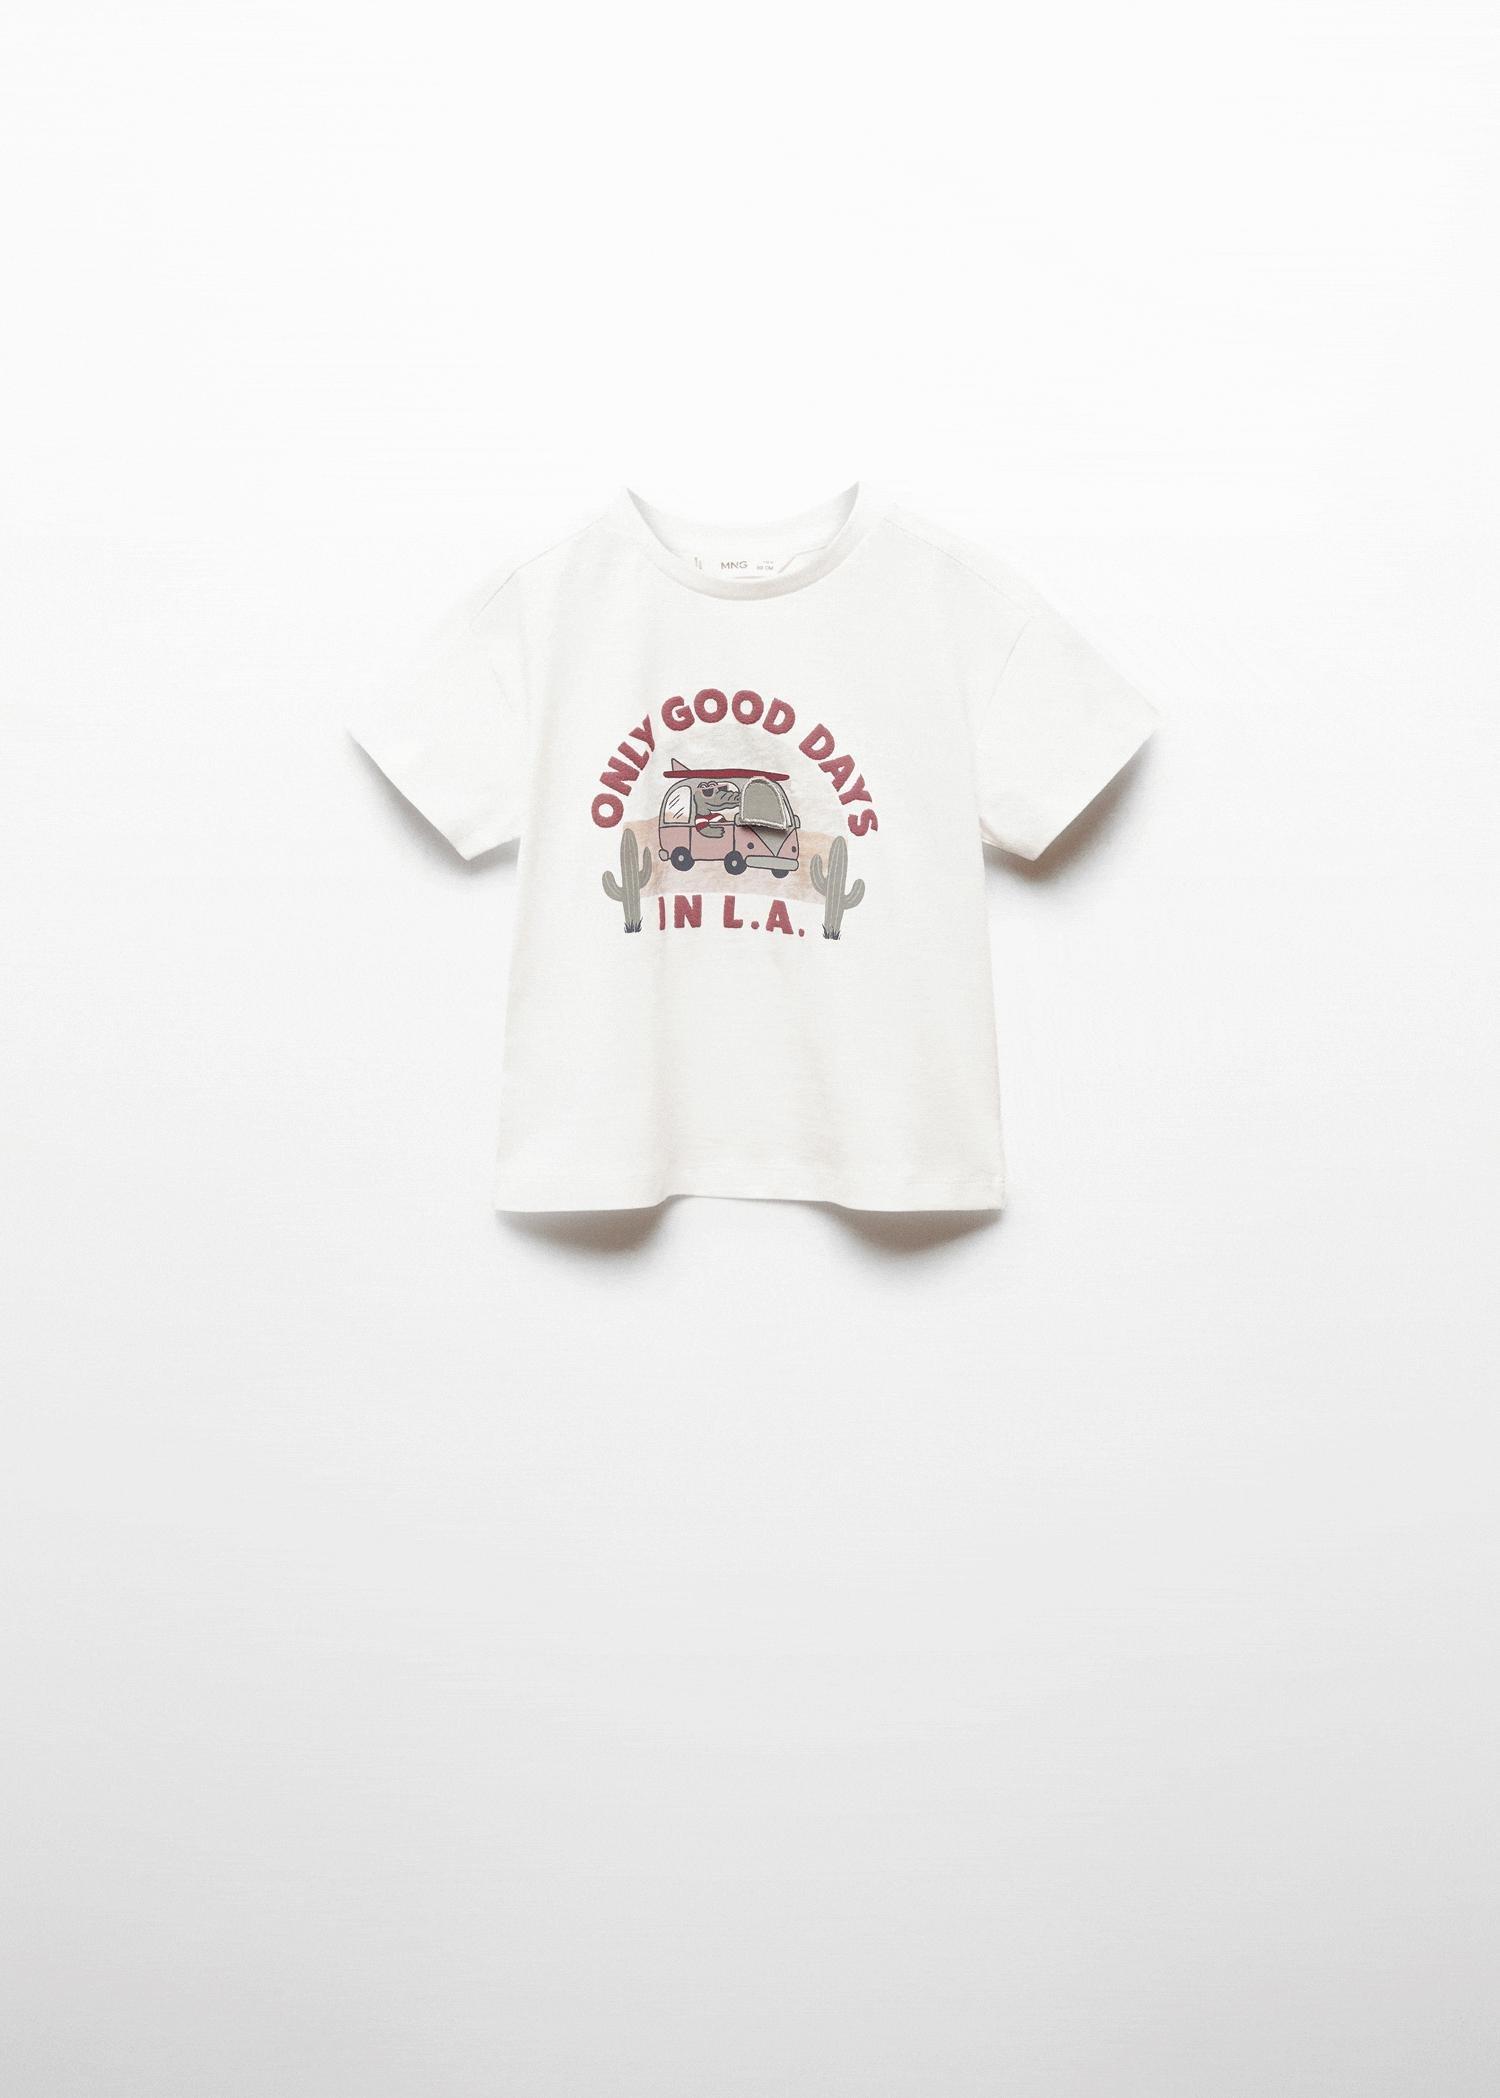 Mango - White Cotton Printed T-Shirt, Kids Boys